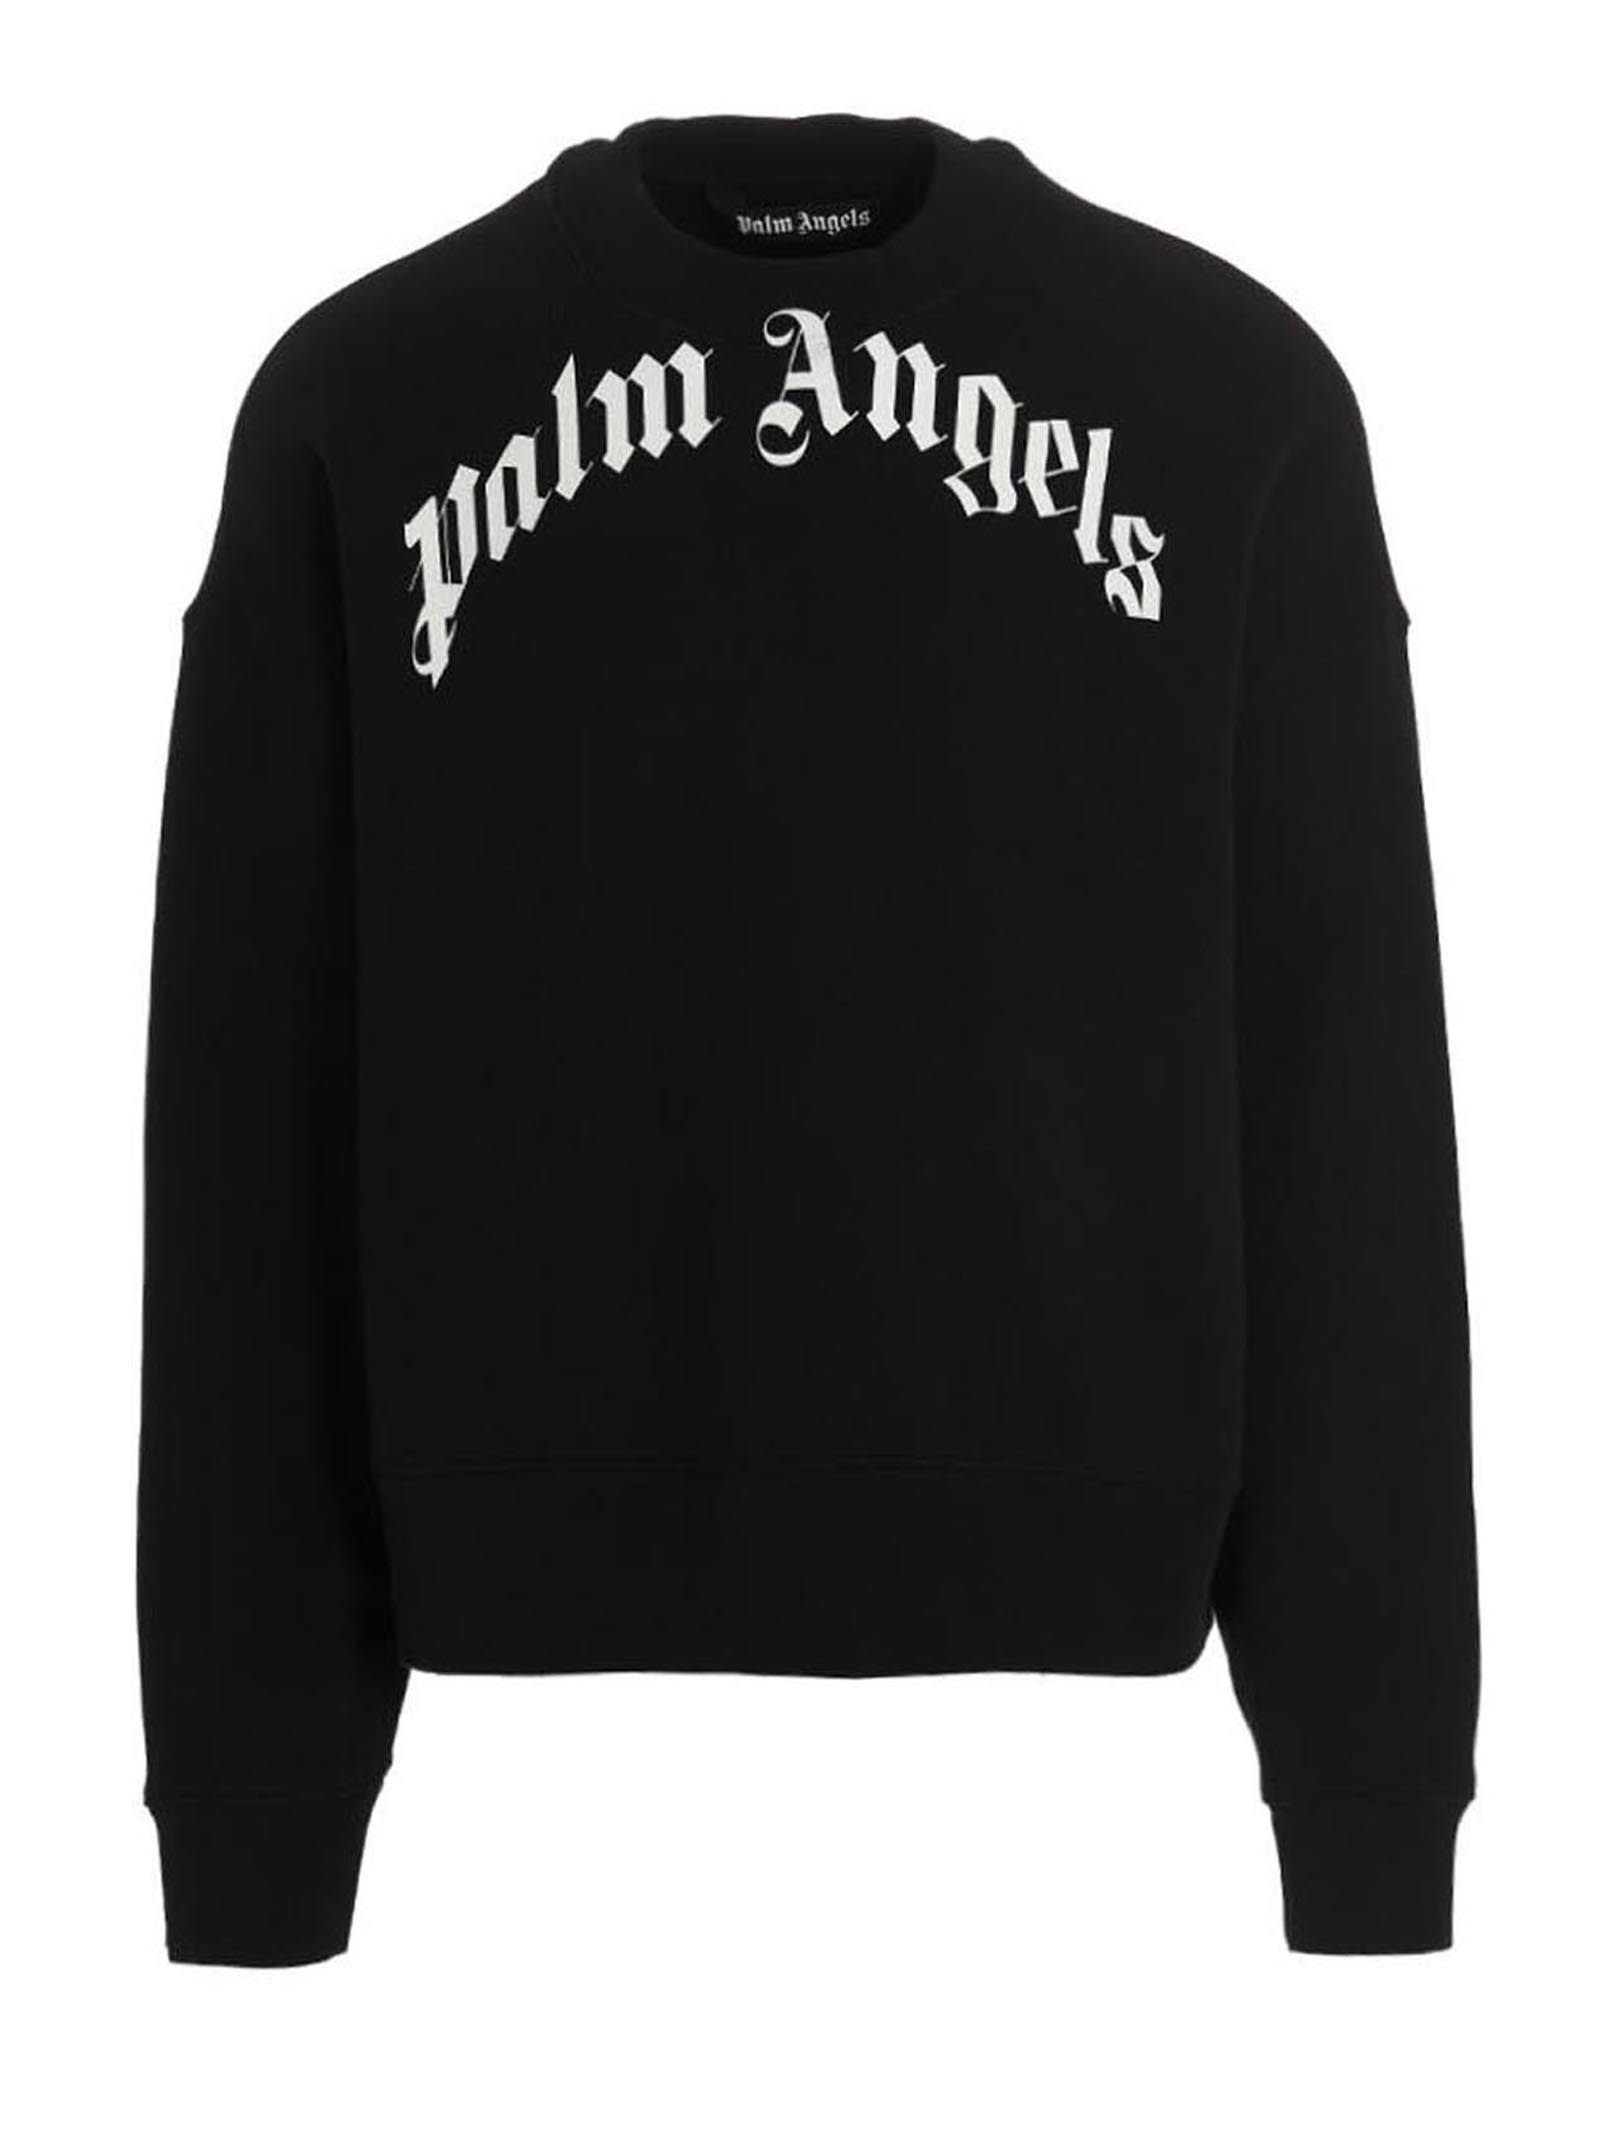 Palm Angels curved Logo Sweatshirt